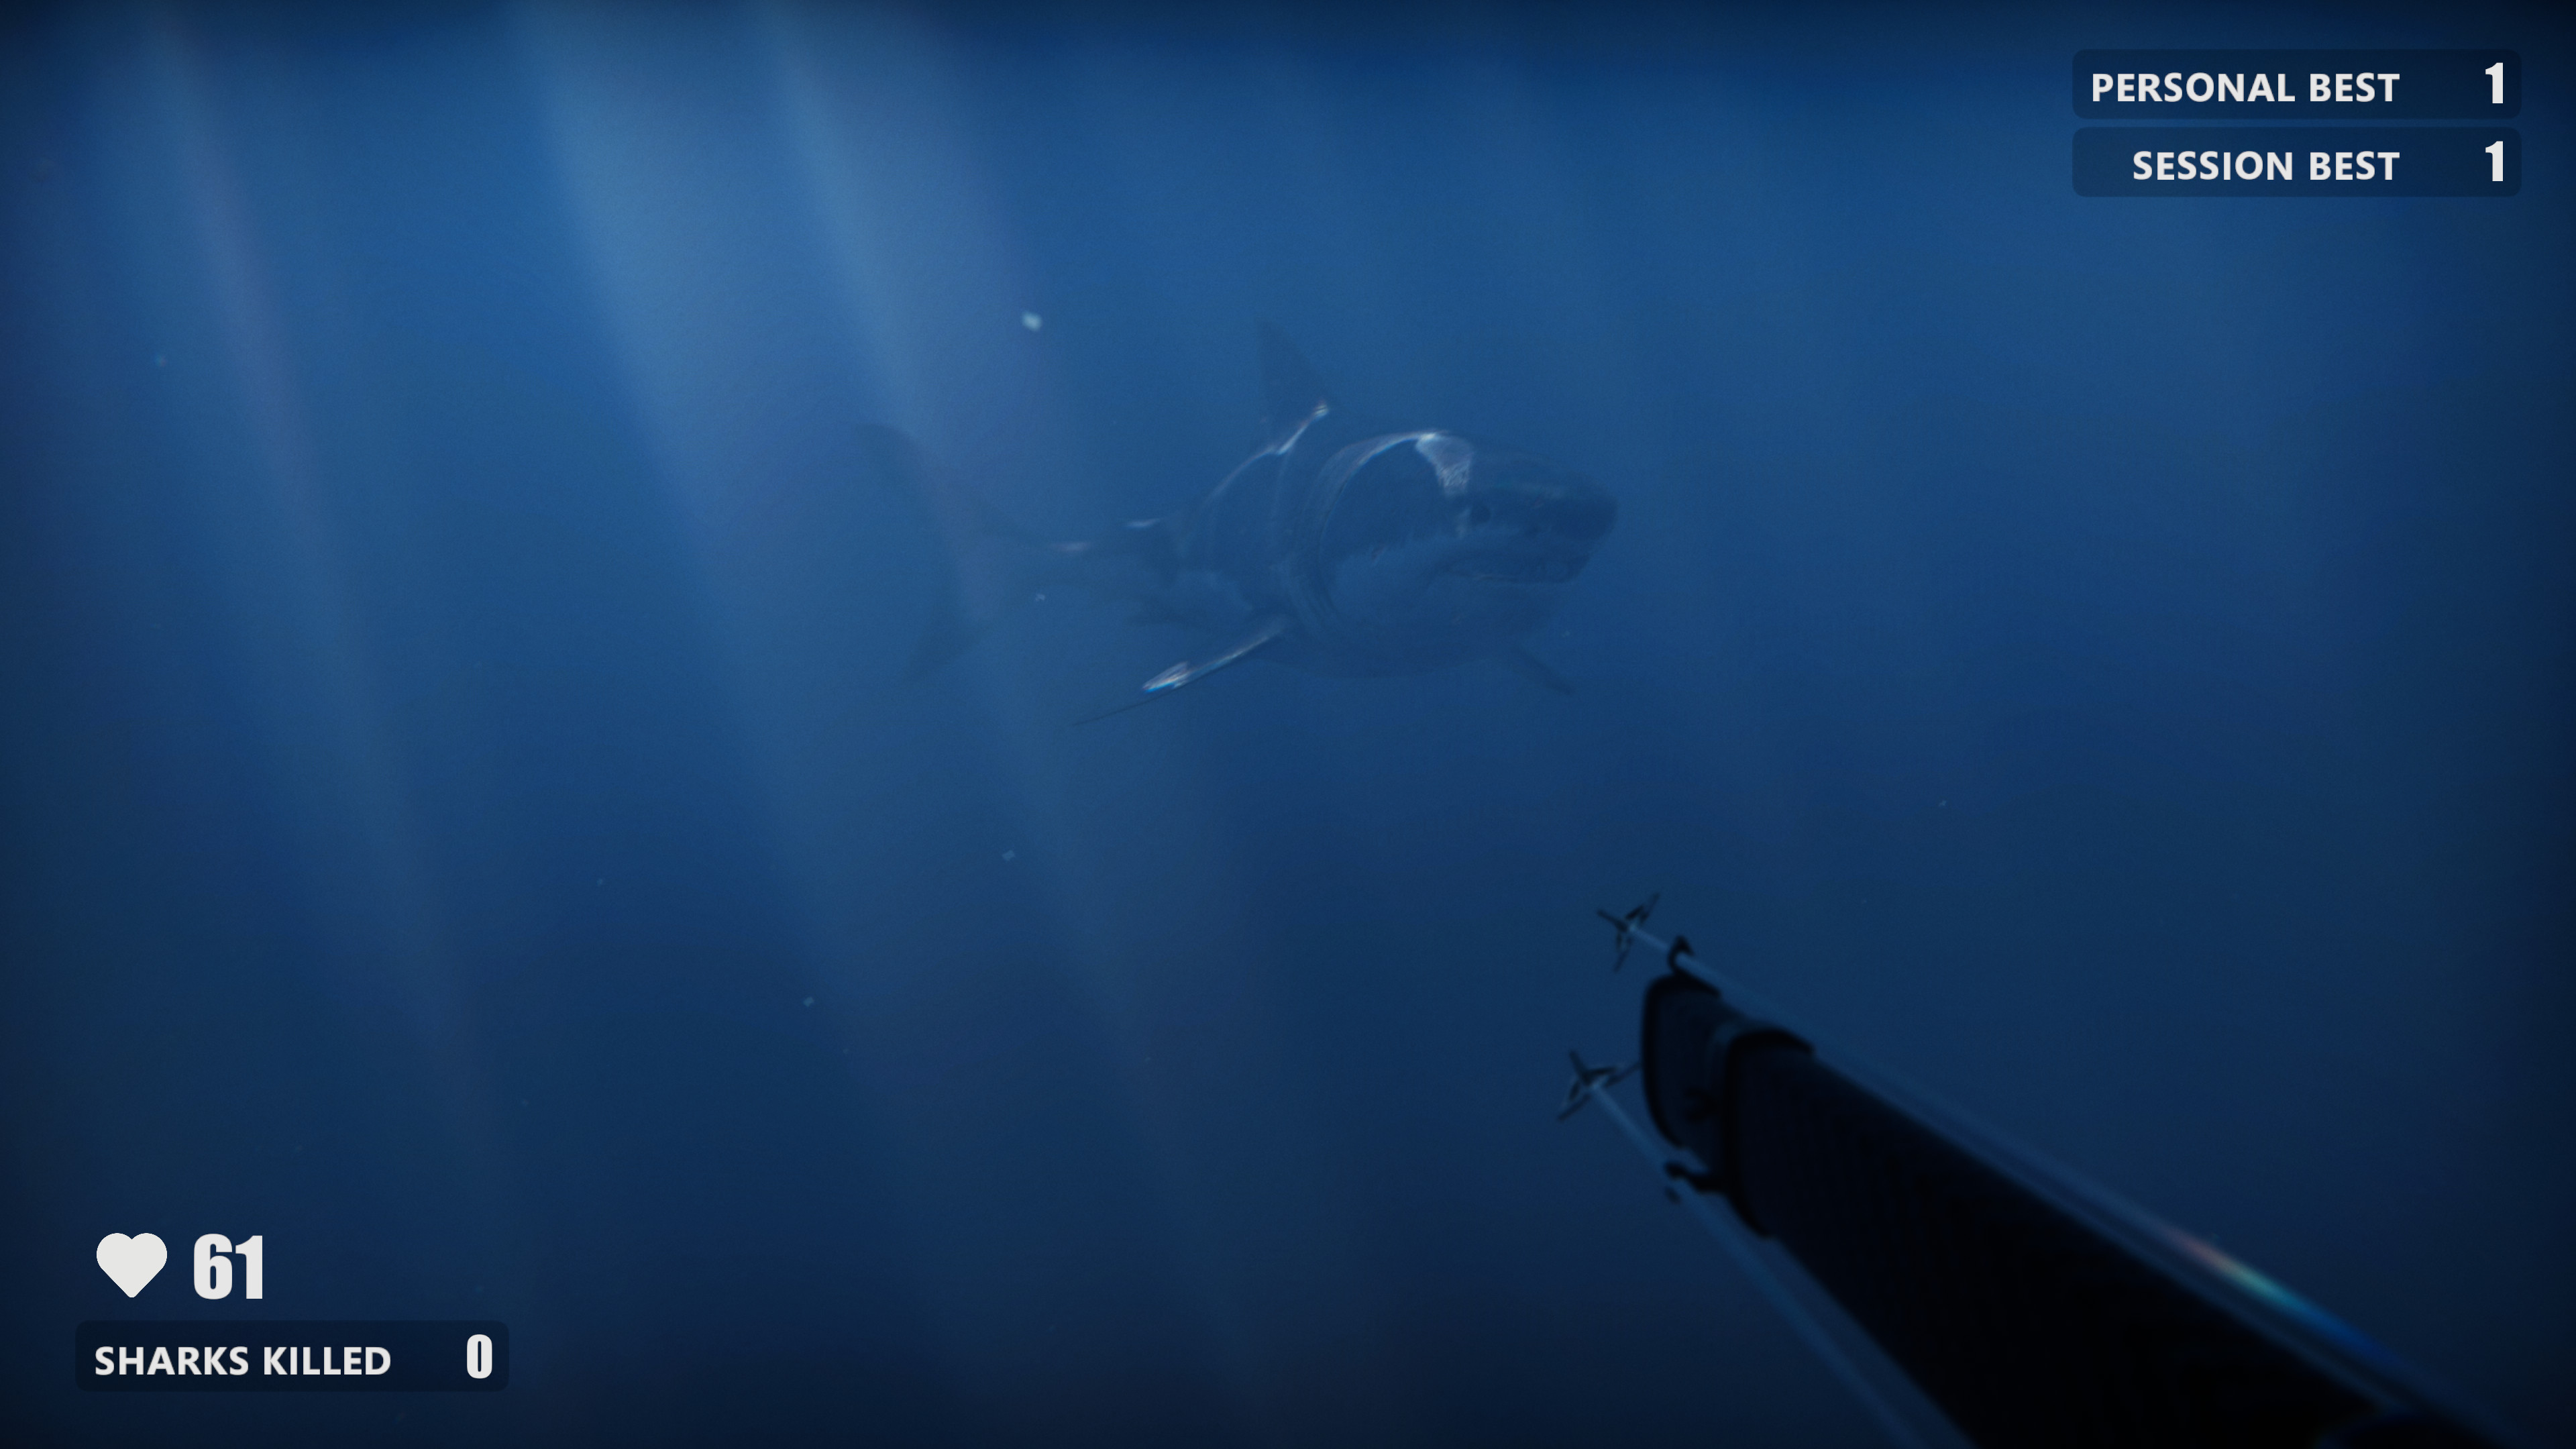 Death in the Water screenshot